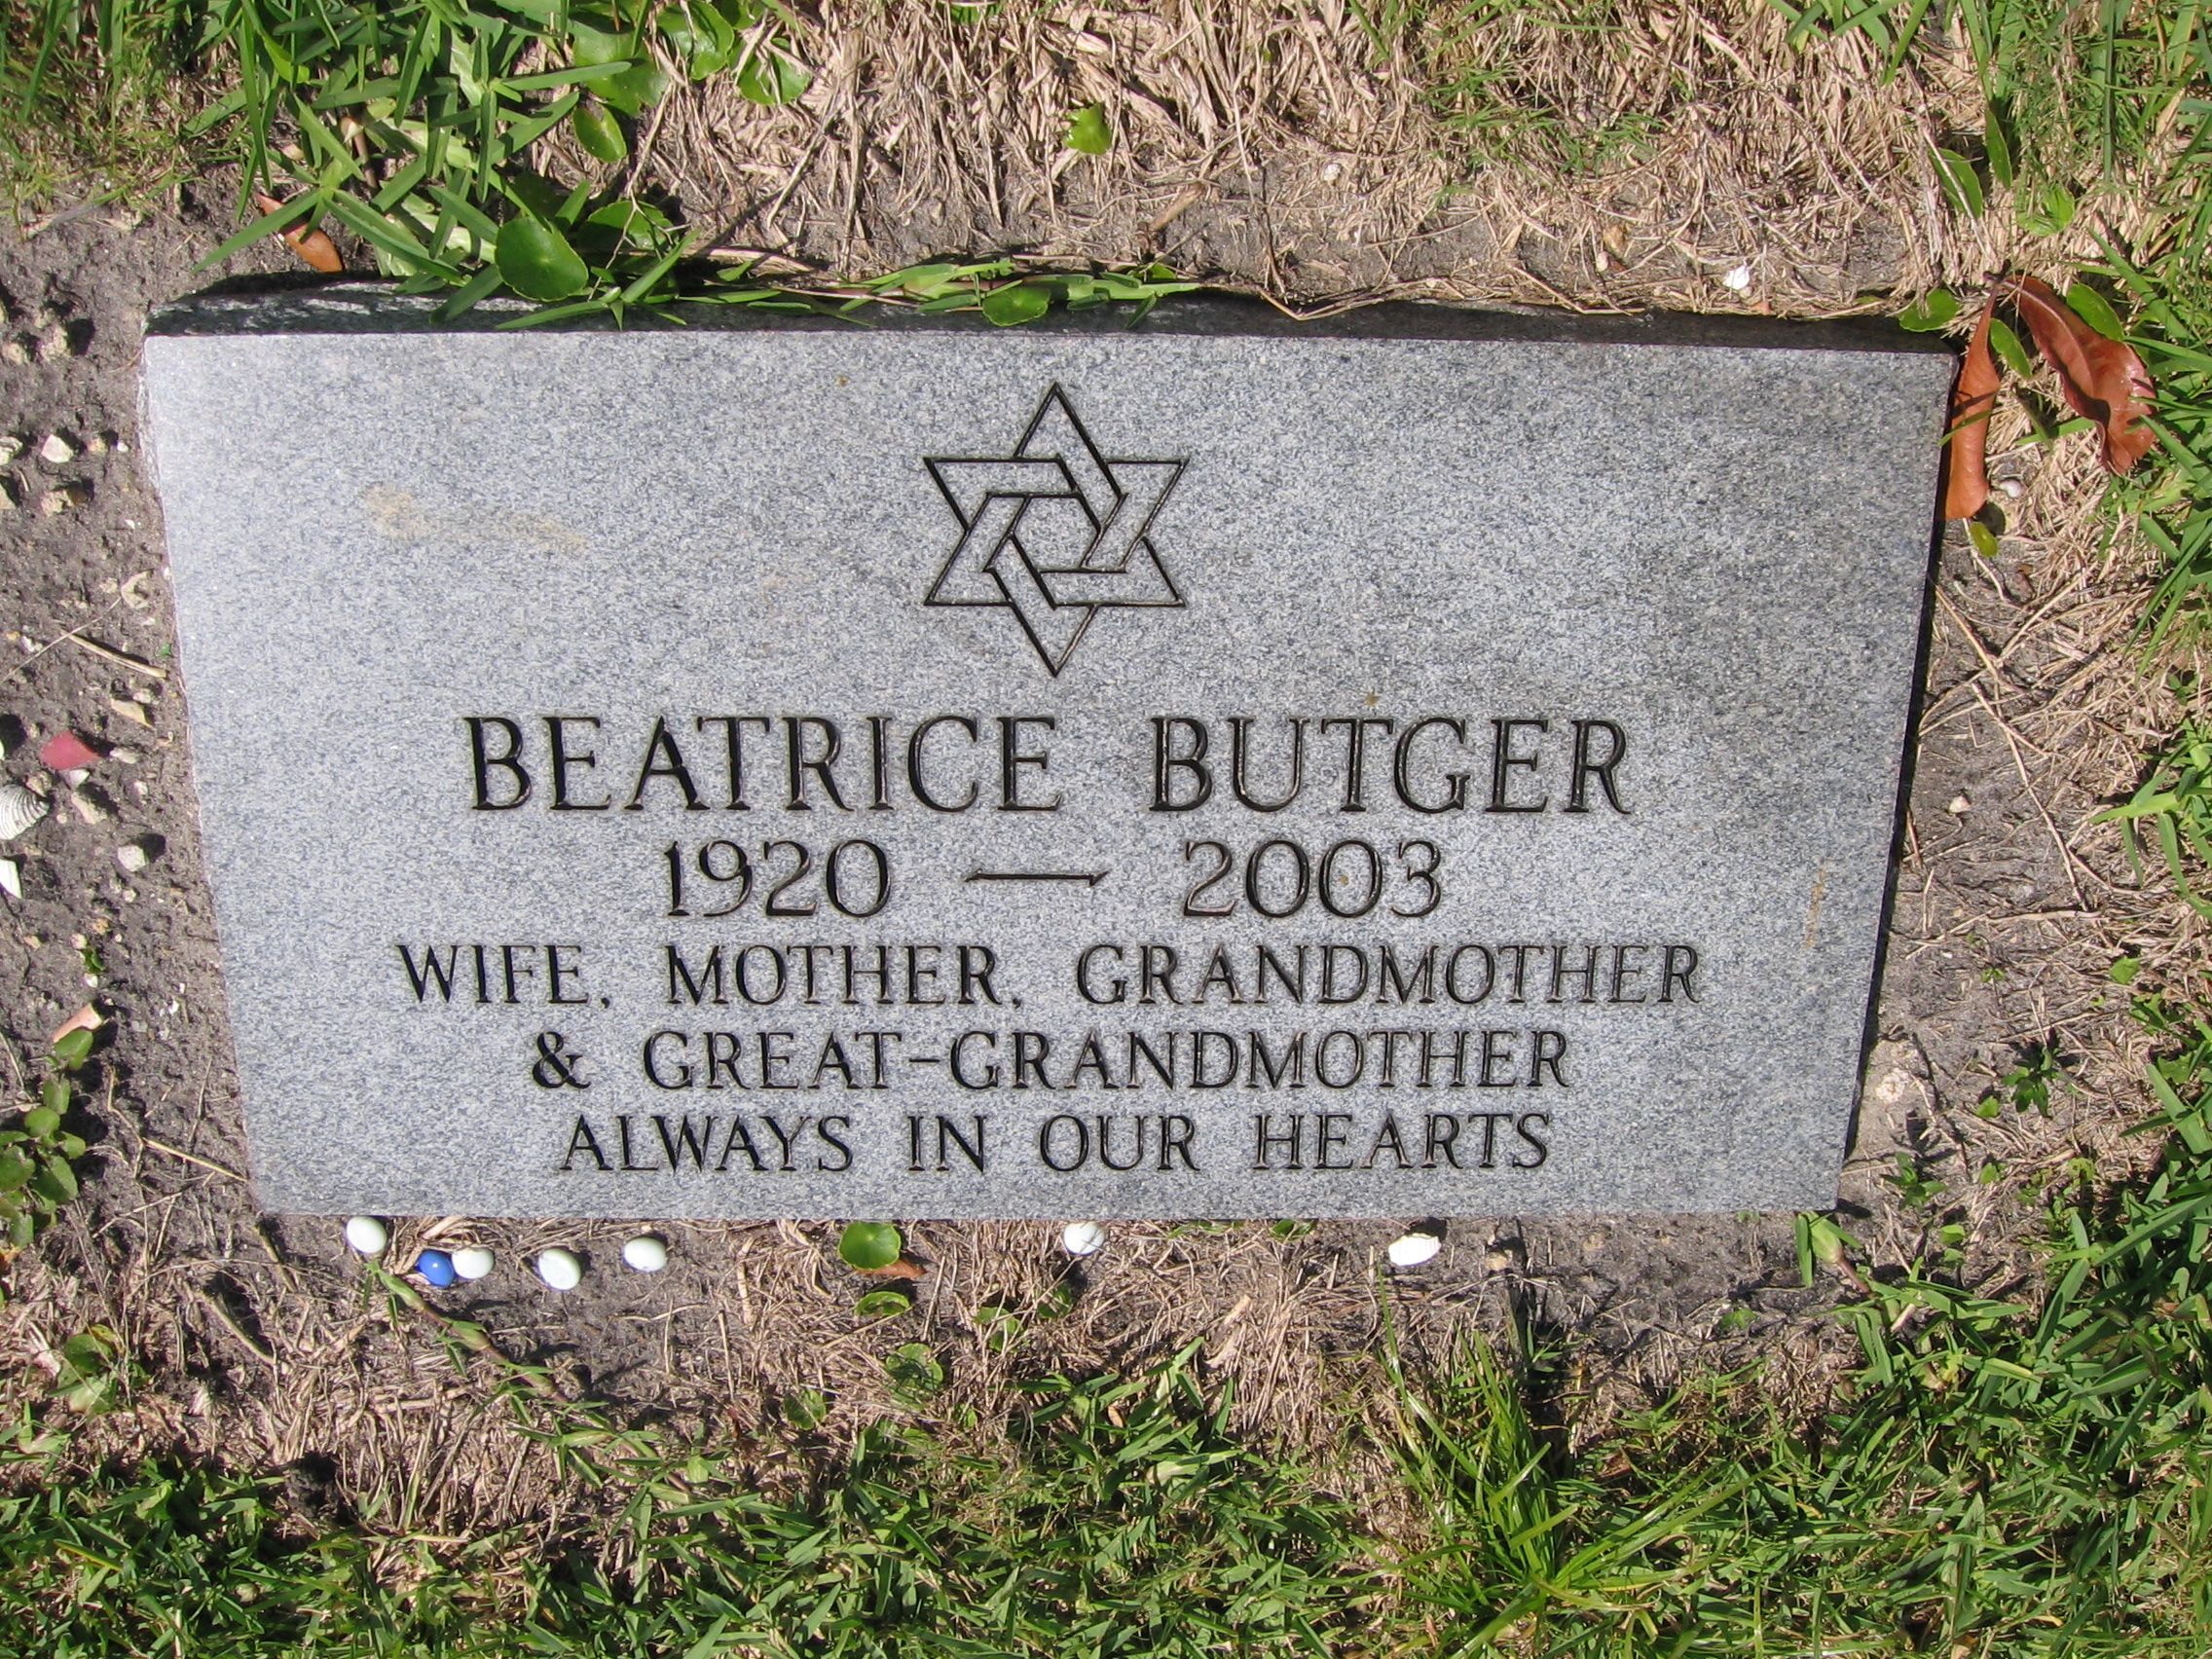 Beatrice Butger